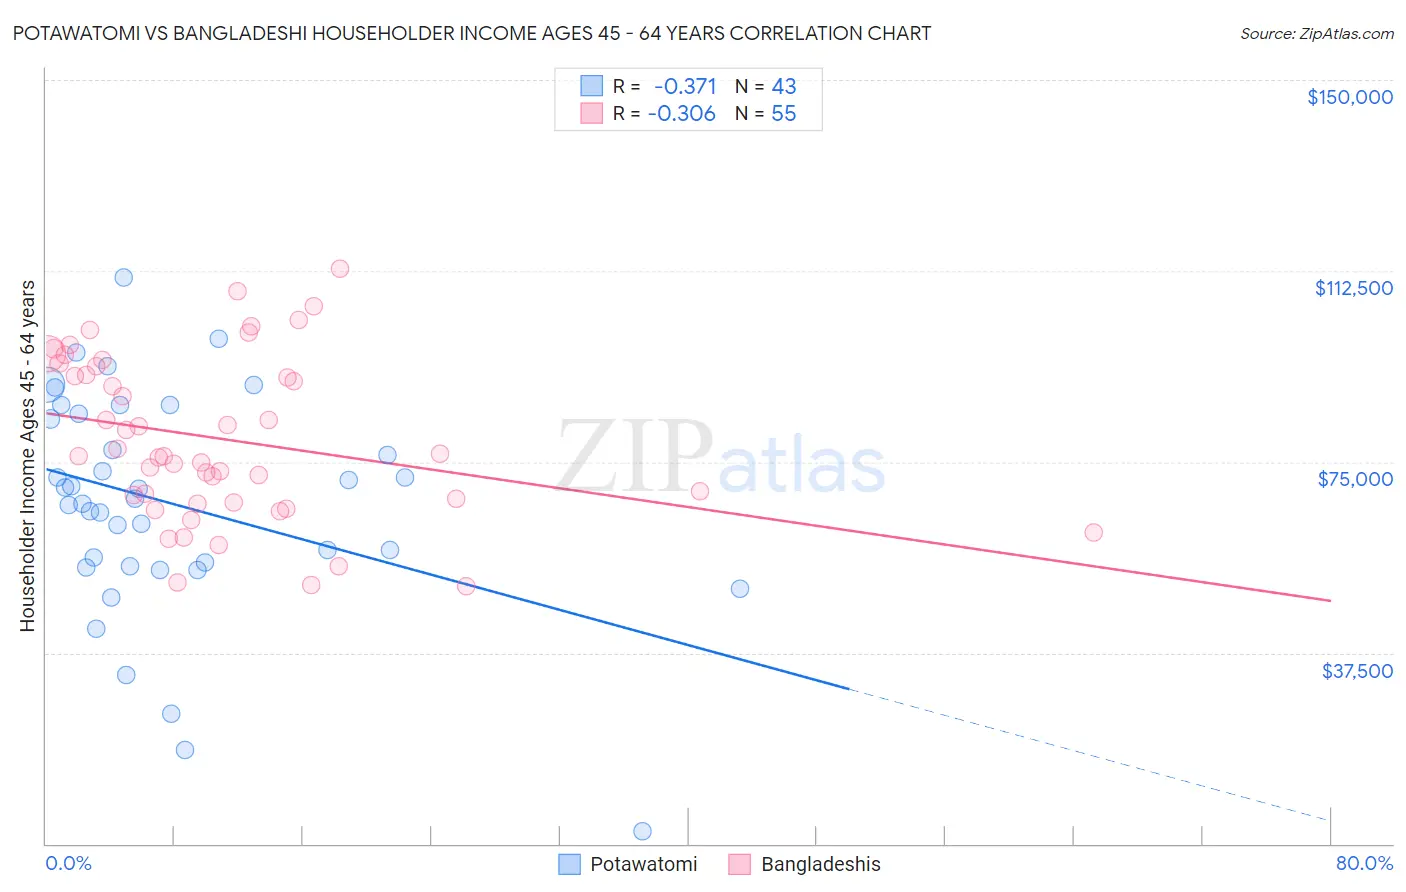 Potawatomi vs Bangladeshi Householder Income Ages 45 - 64 years